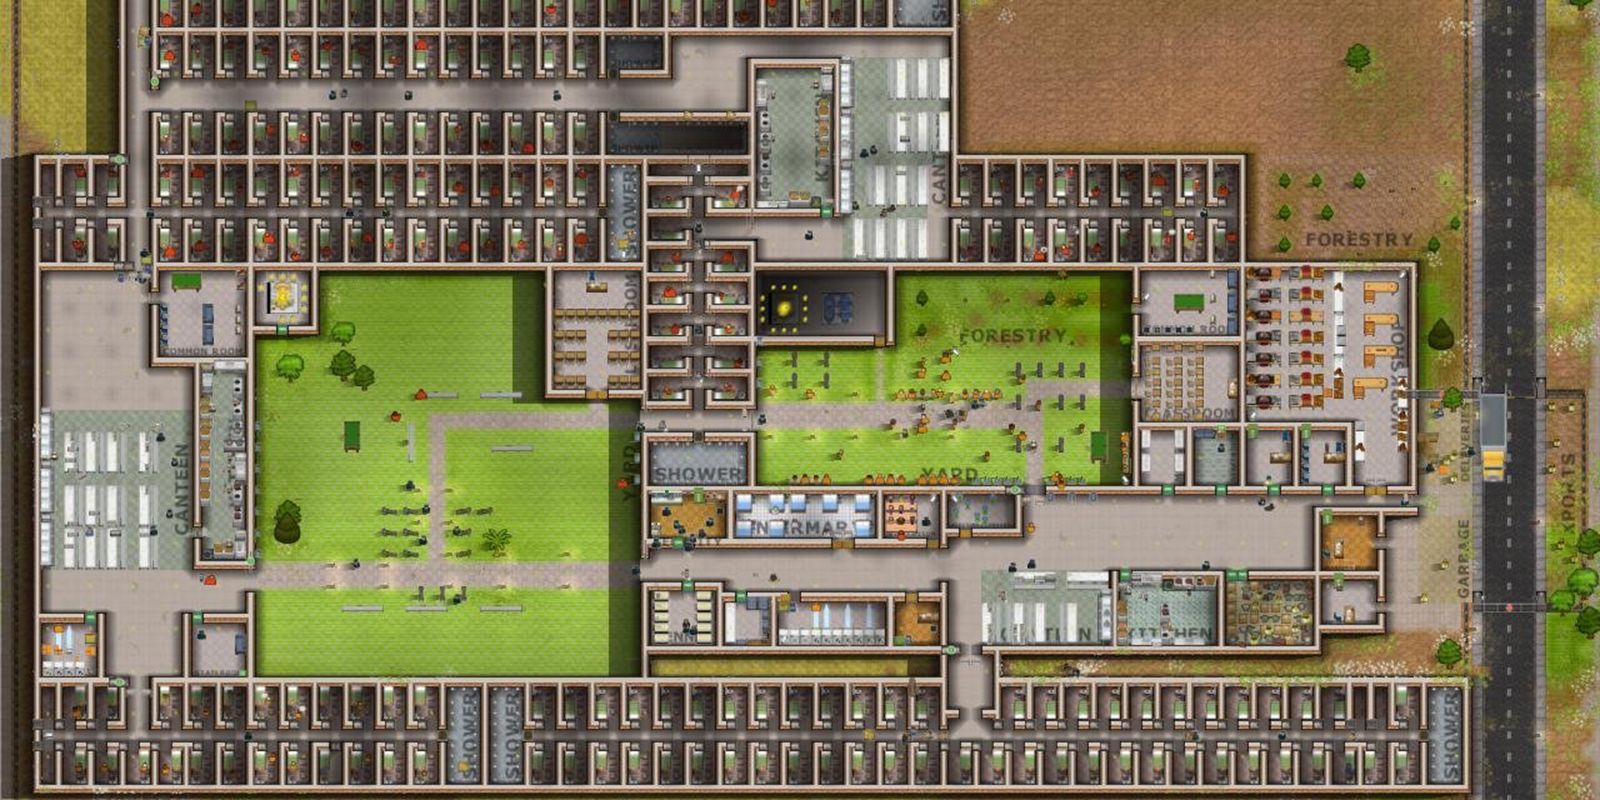 prison architect layout planner